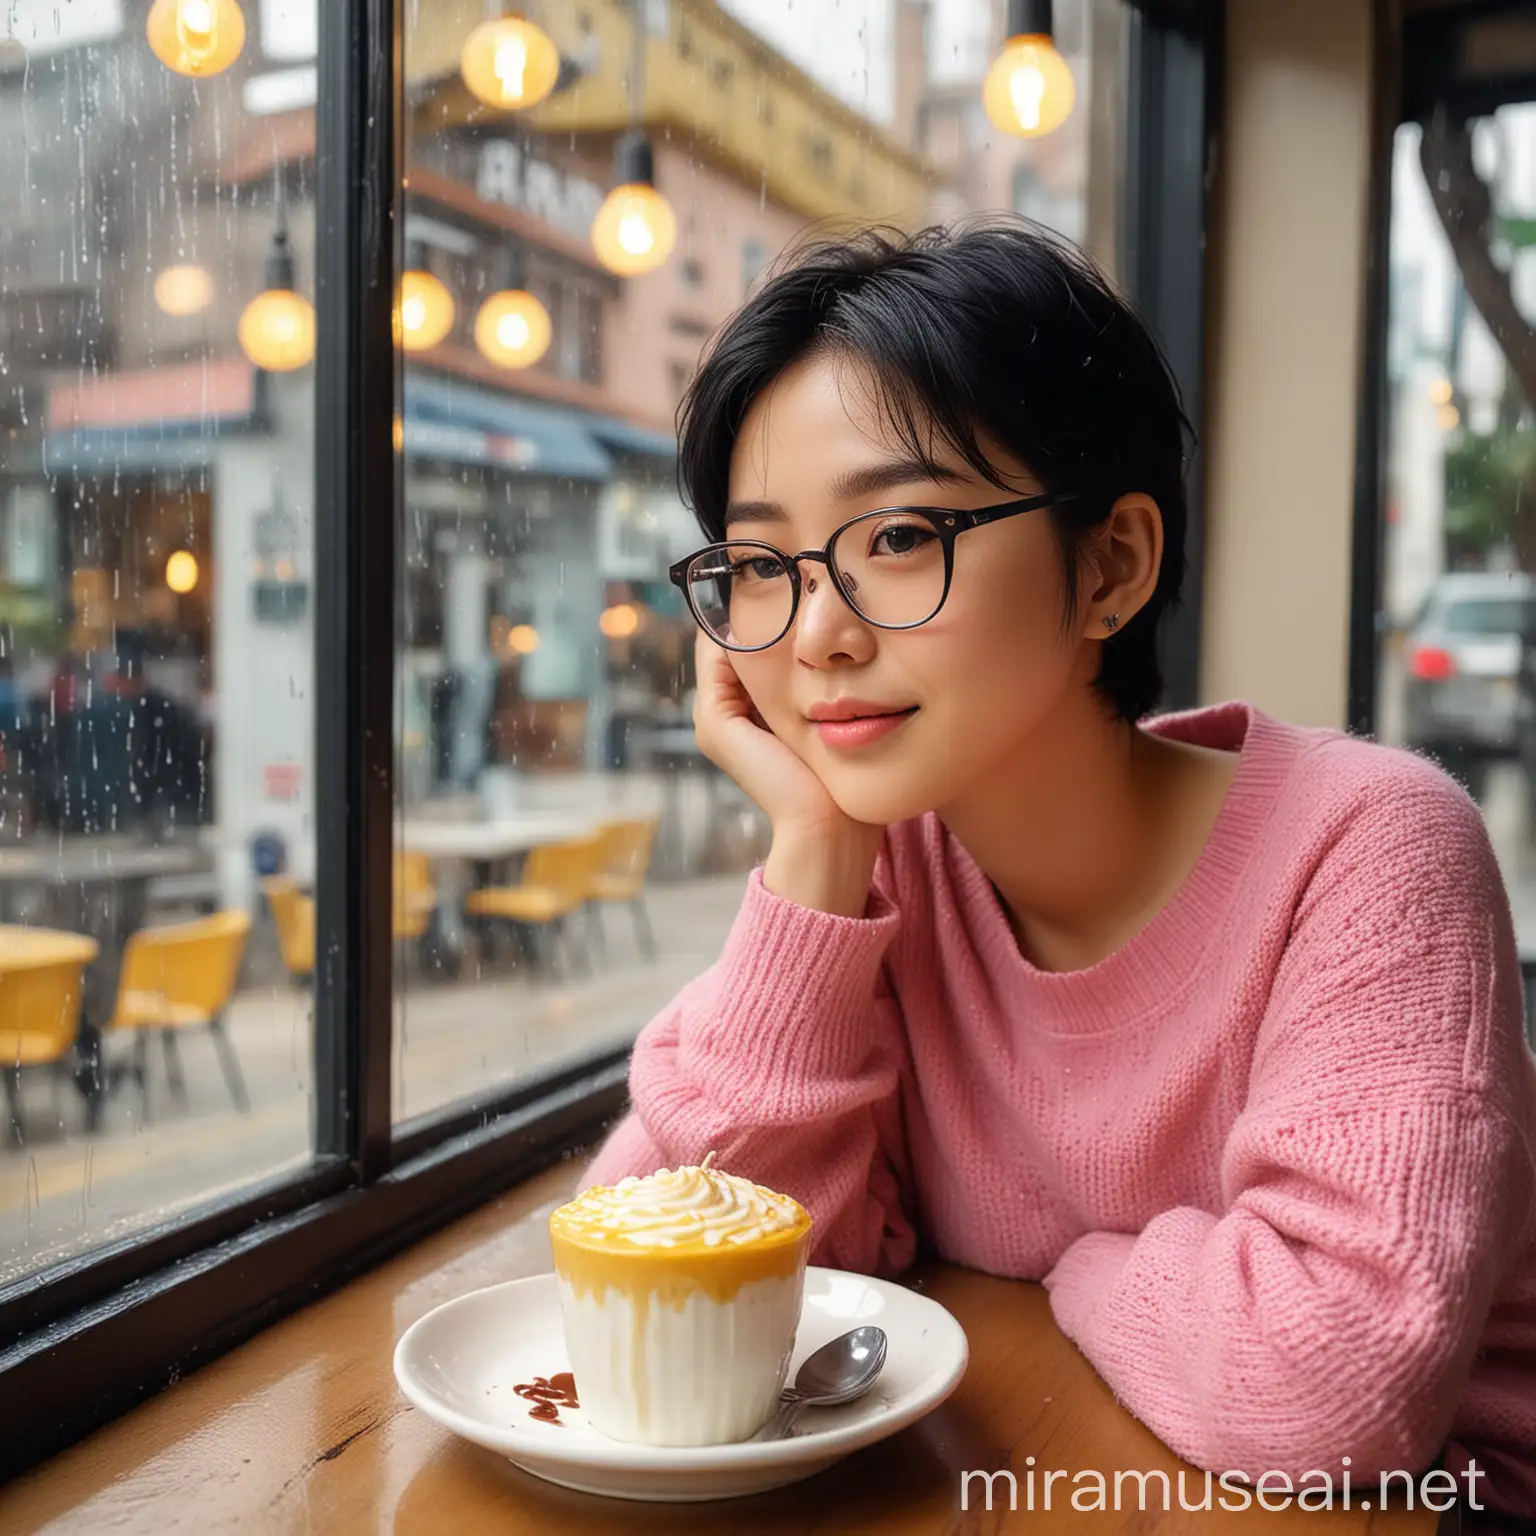 Stylish Korean Woman Enjoying Coffee and Cake in Rainy Cafe Morning